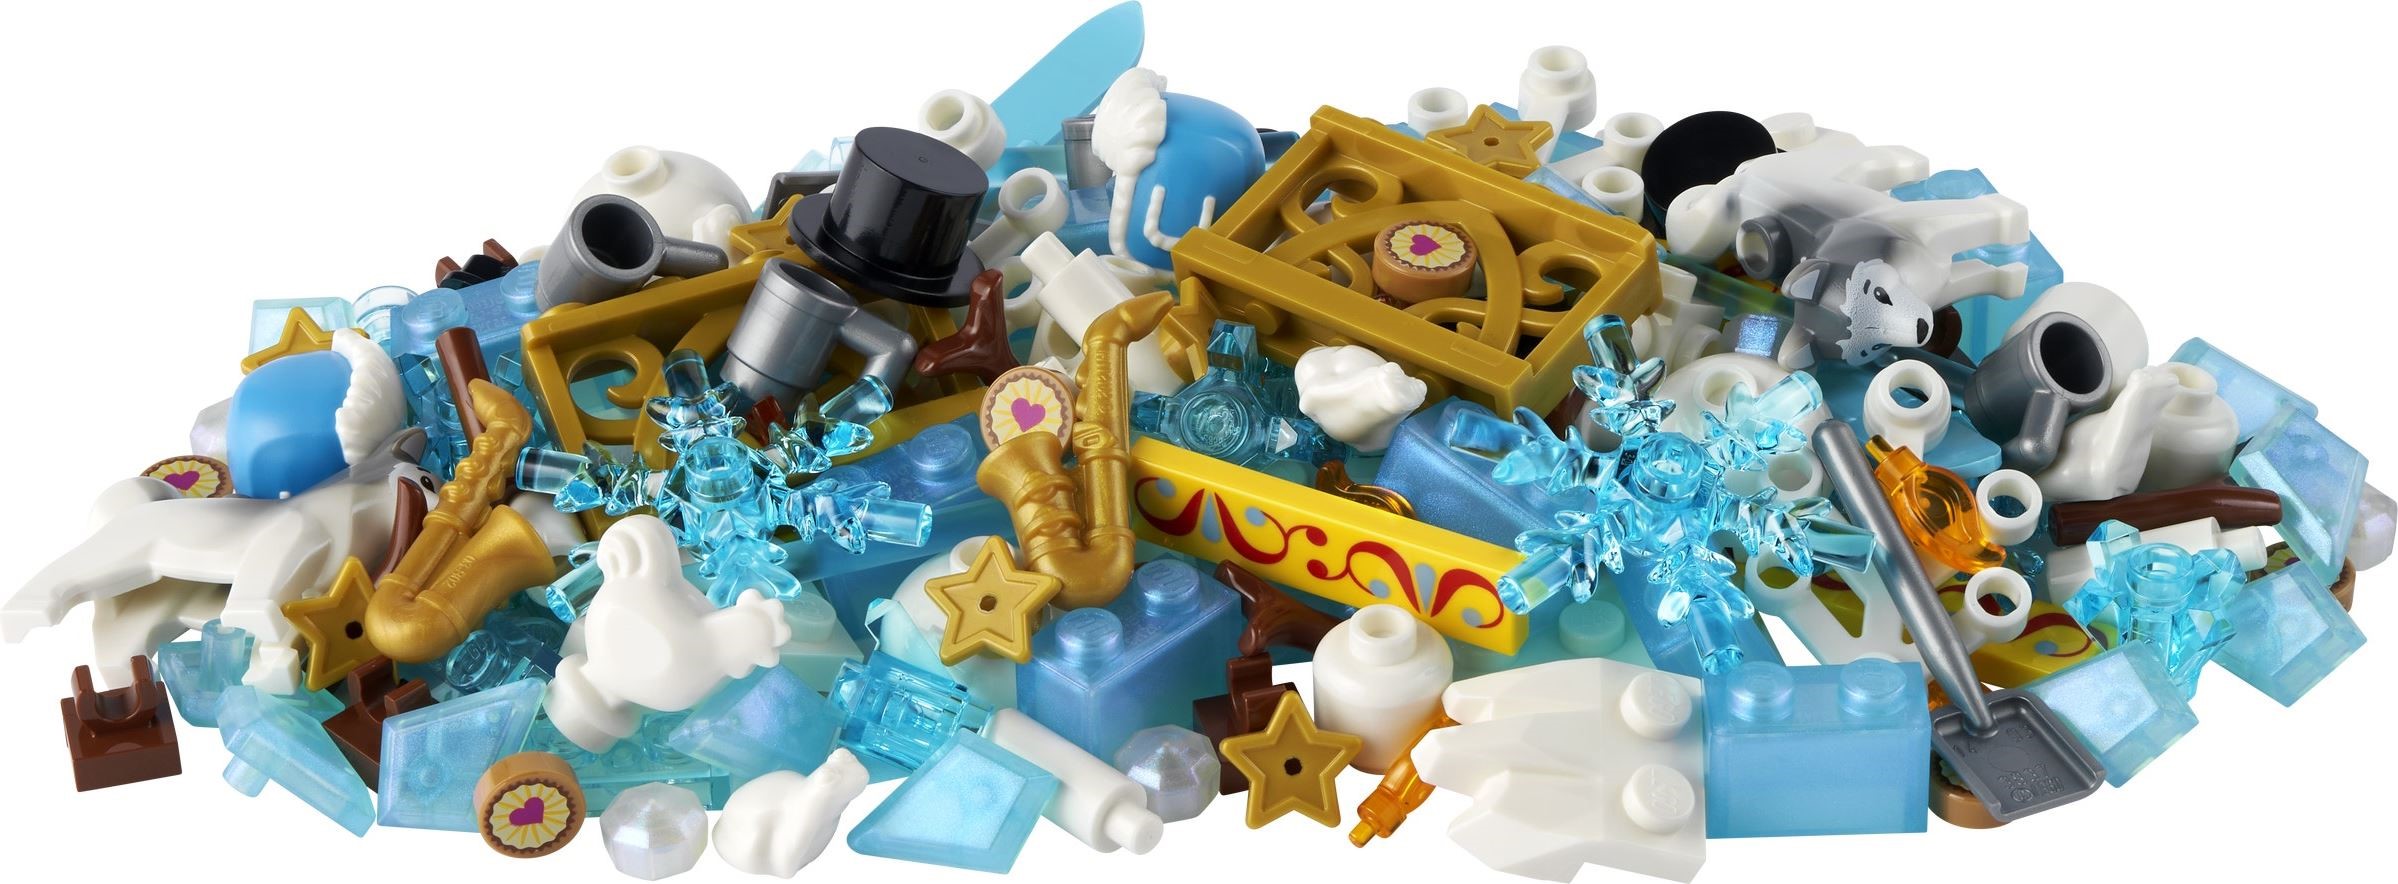 add-on packs coming soon | Brickset: LEGO set and database